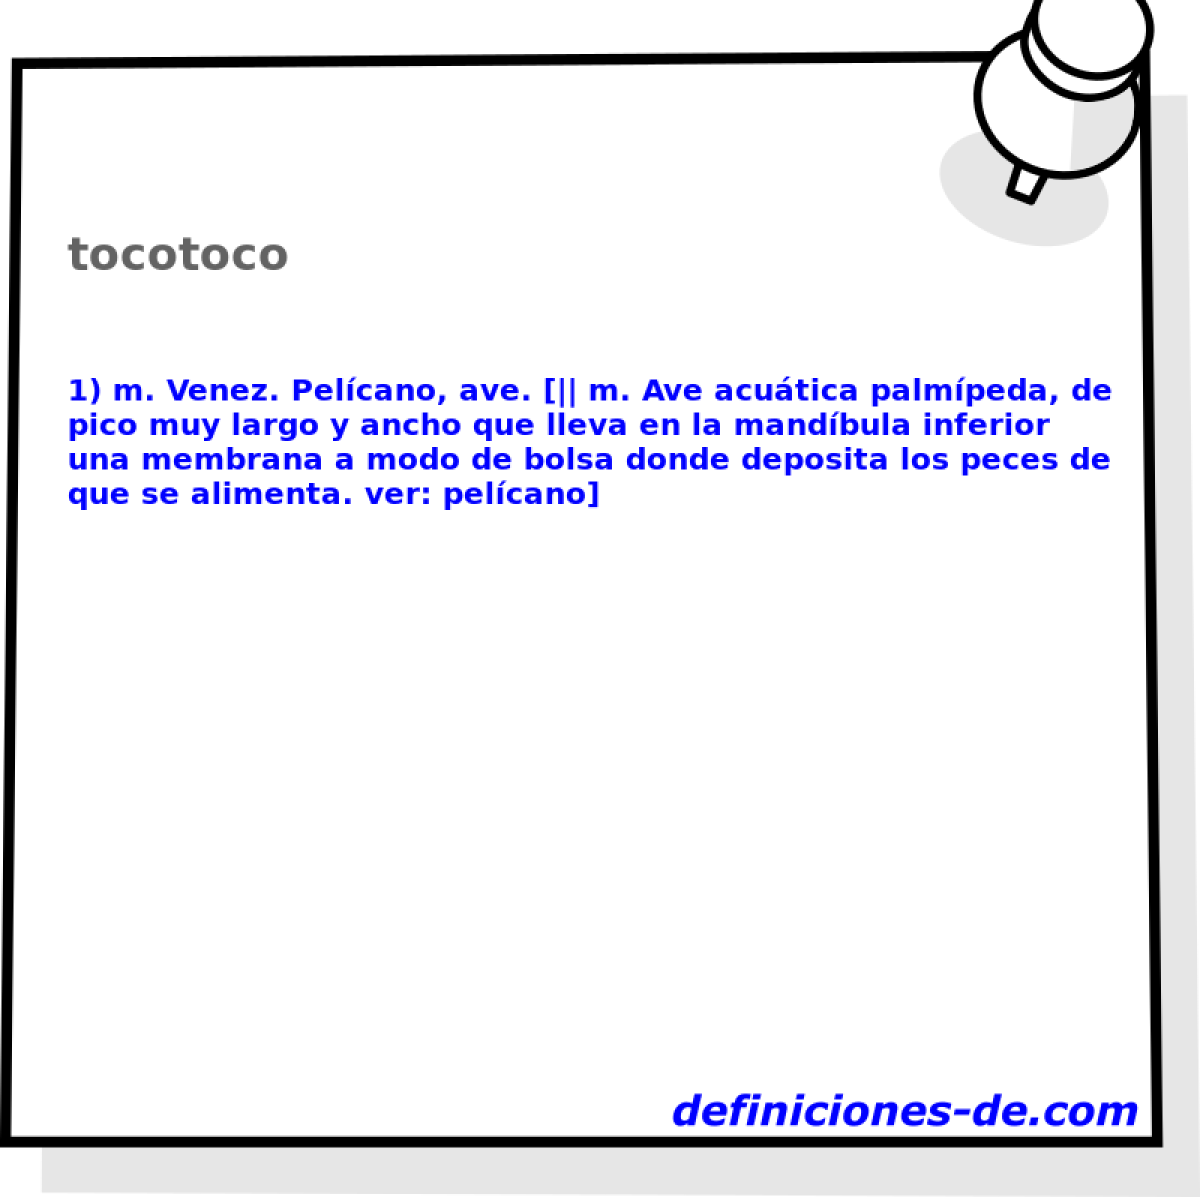 tocotoco 